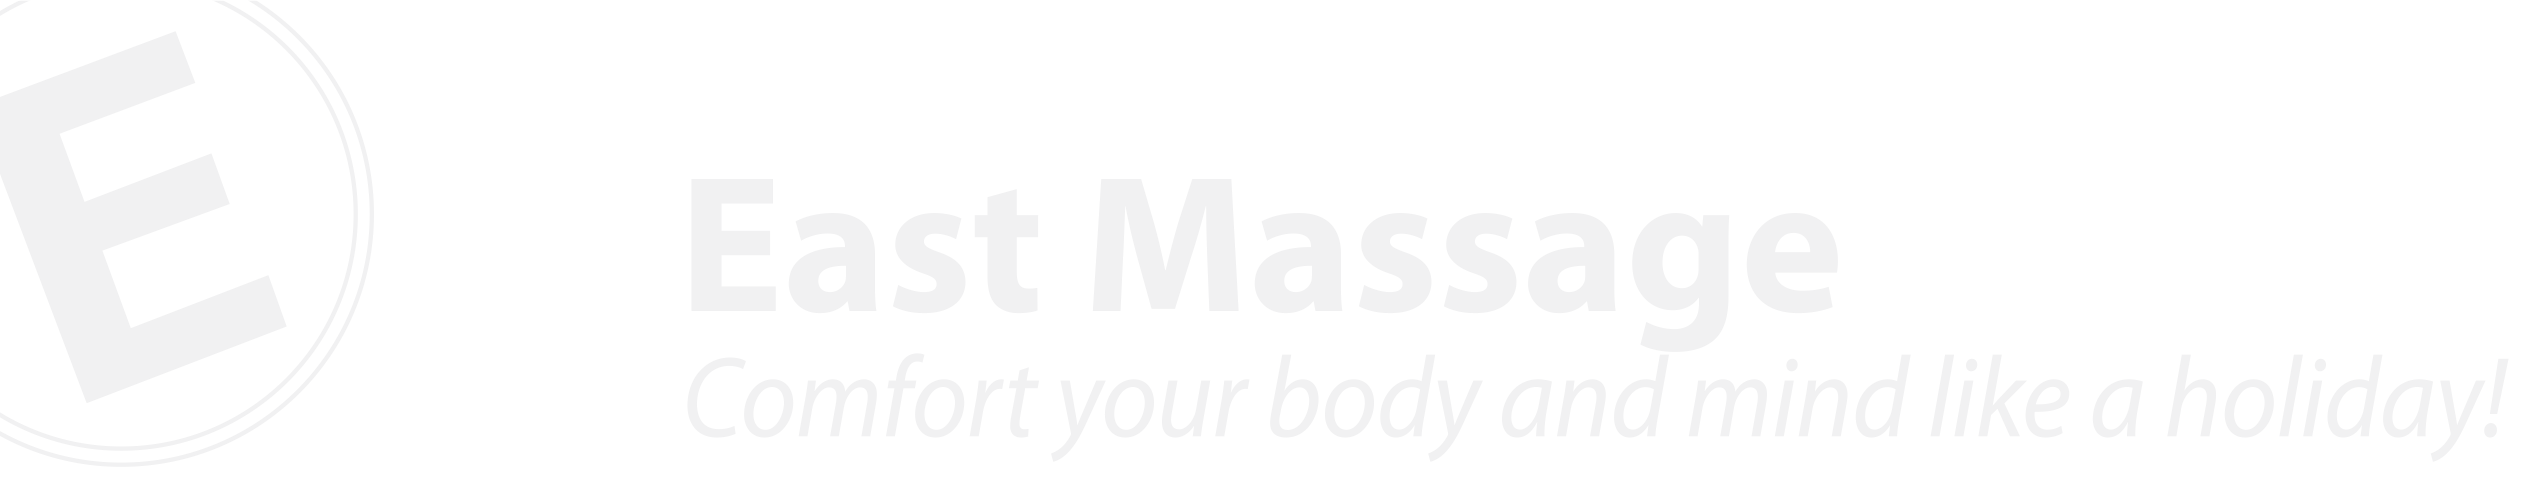 East Massage